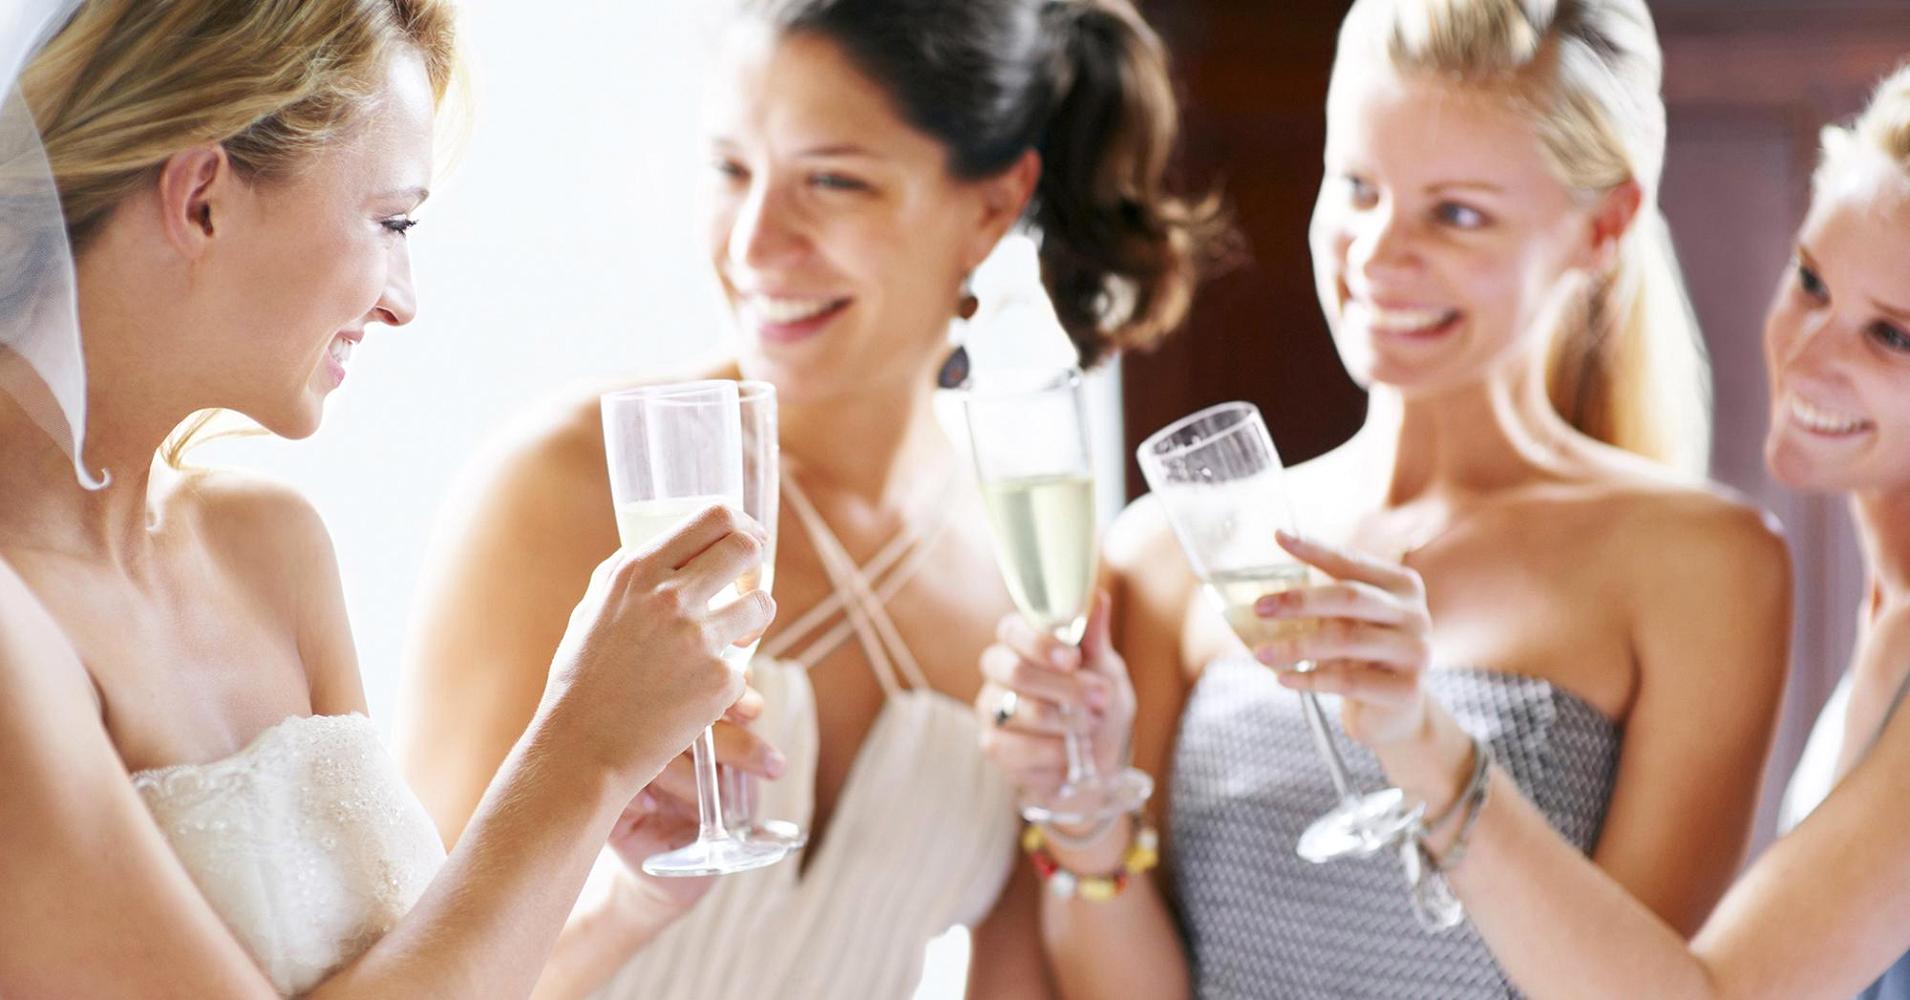 A real ringer: Pay $2,000, get a wedding bridesmaid